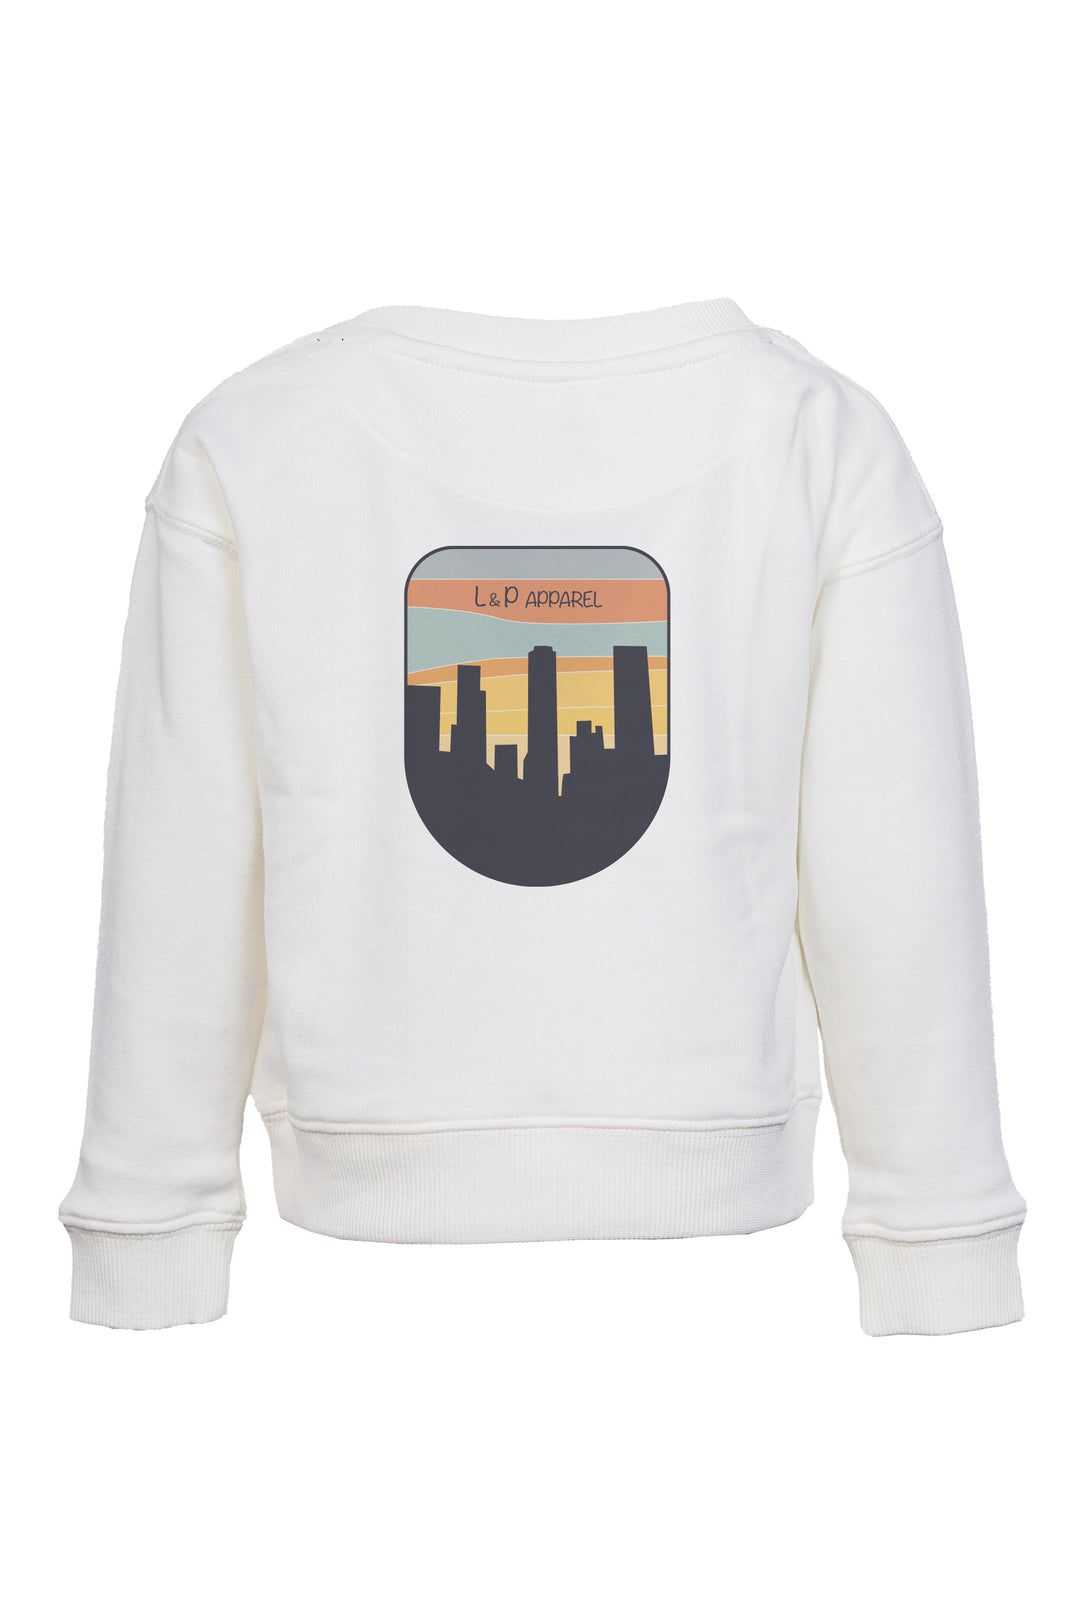 French Cotton Crewneck Sweater [Chicago] [Junior]